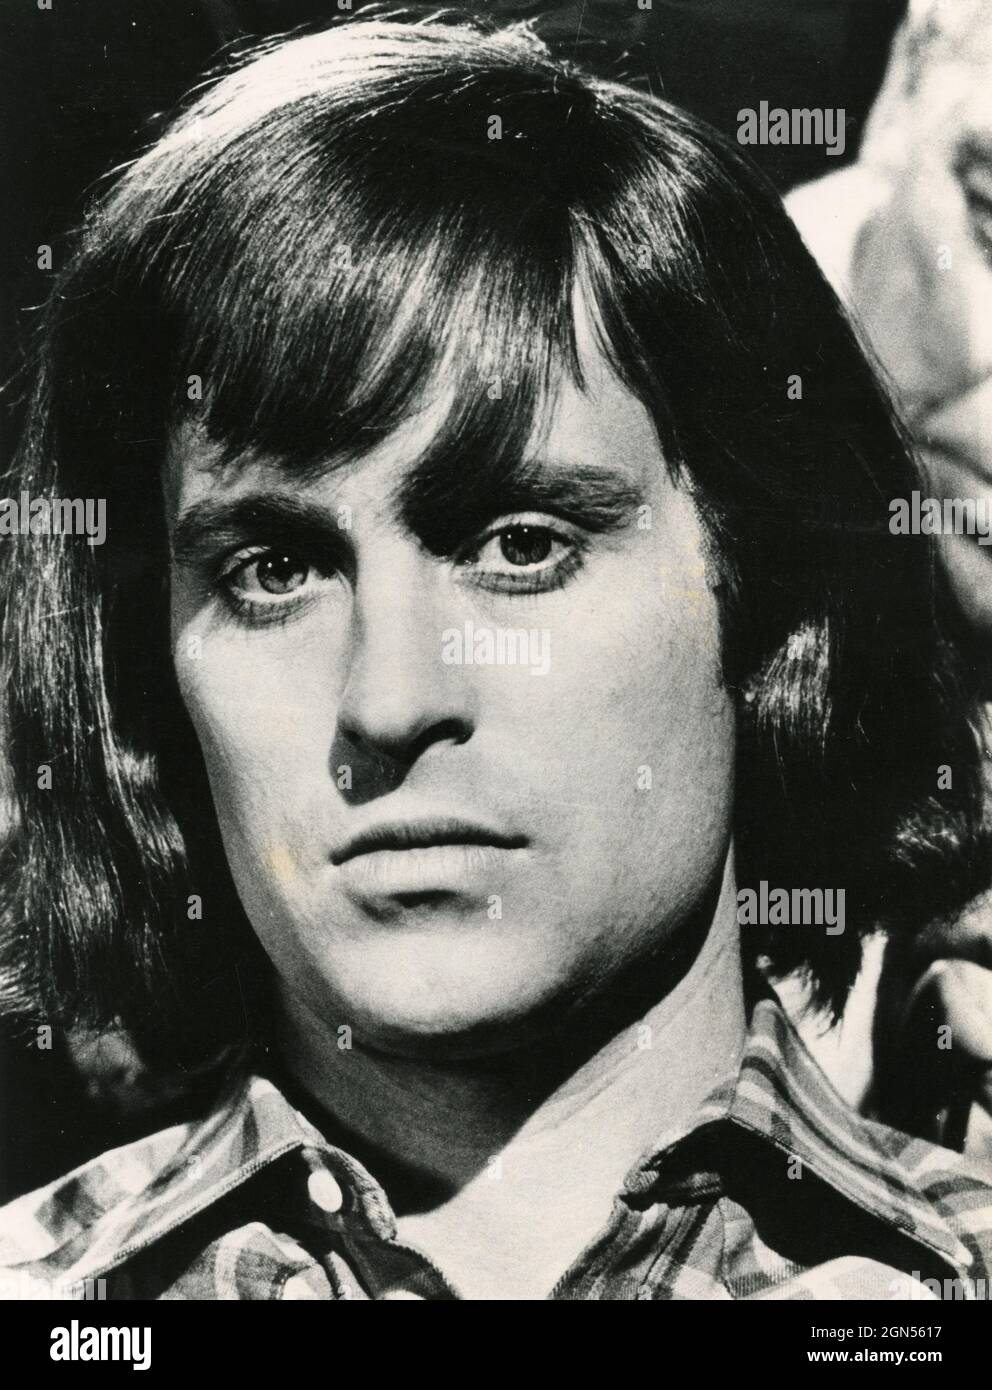 American actor Michael Douglas, 1970s Stock Photo